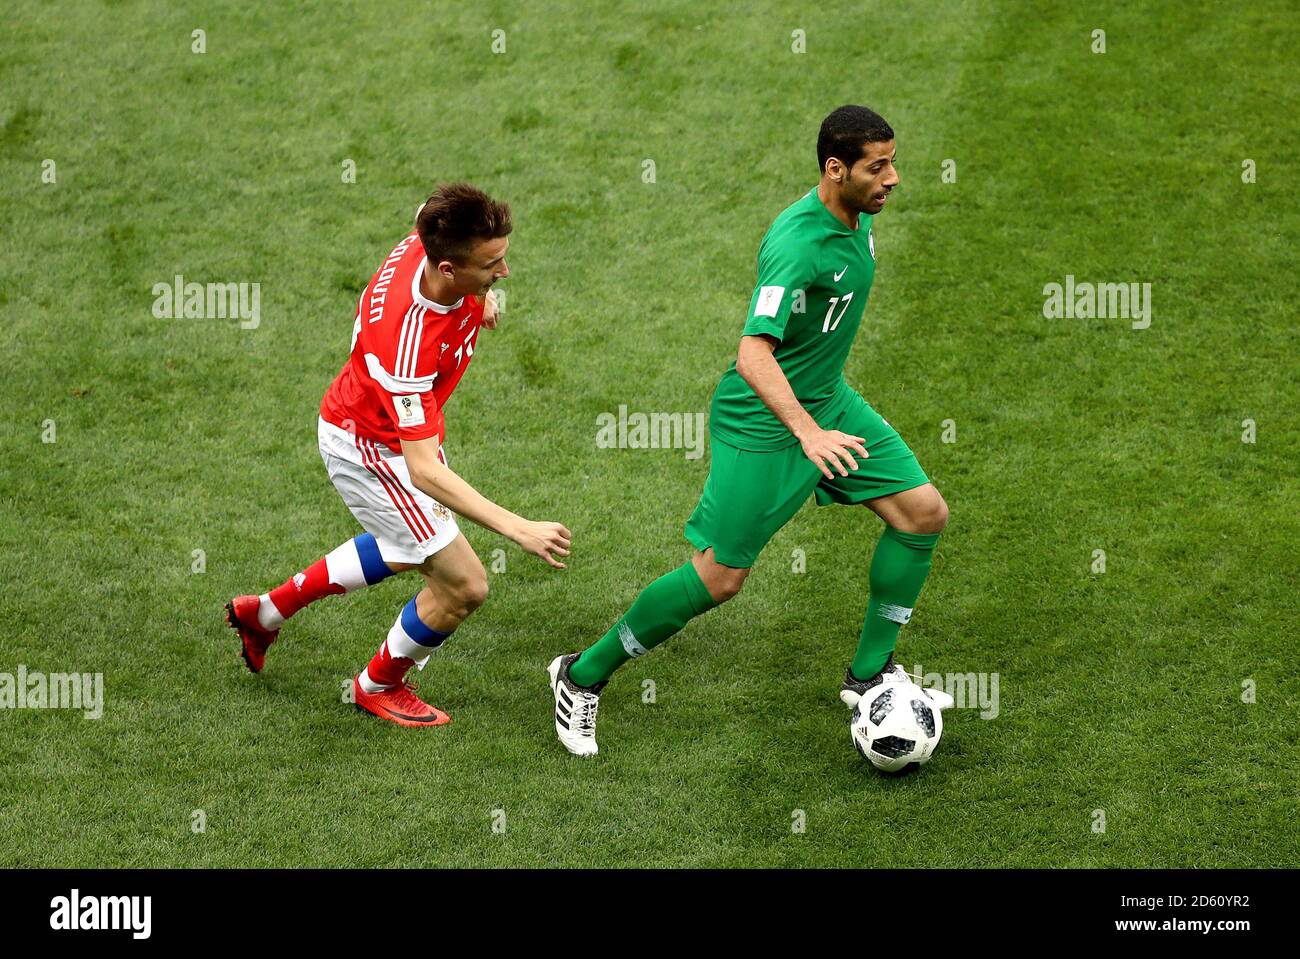 Russia's Aleksandr Golovin (left) and Saudi Arabia's Taisir Al-Jassim (right) battle for the ball Stock Photo